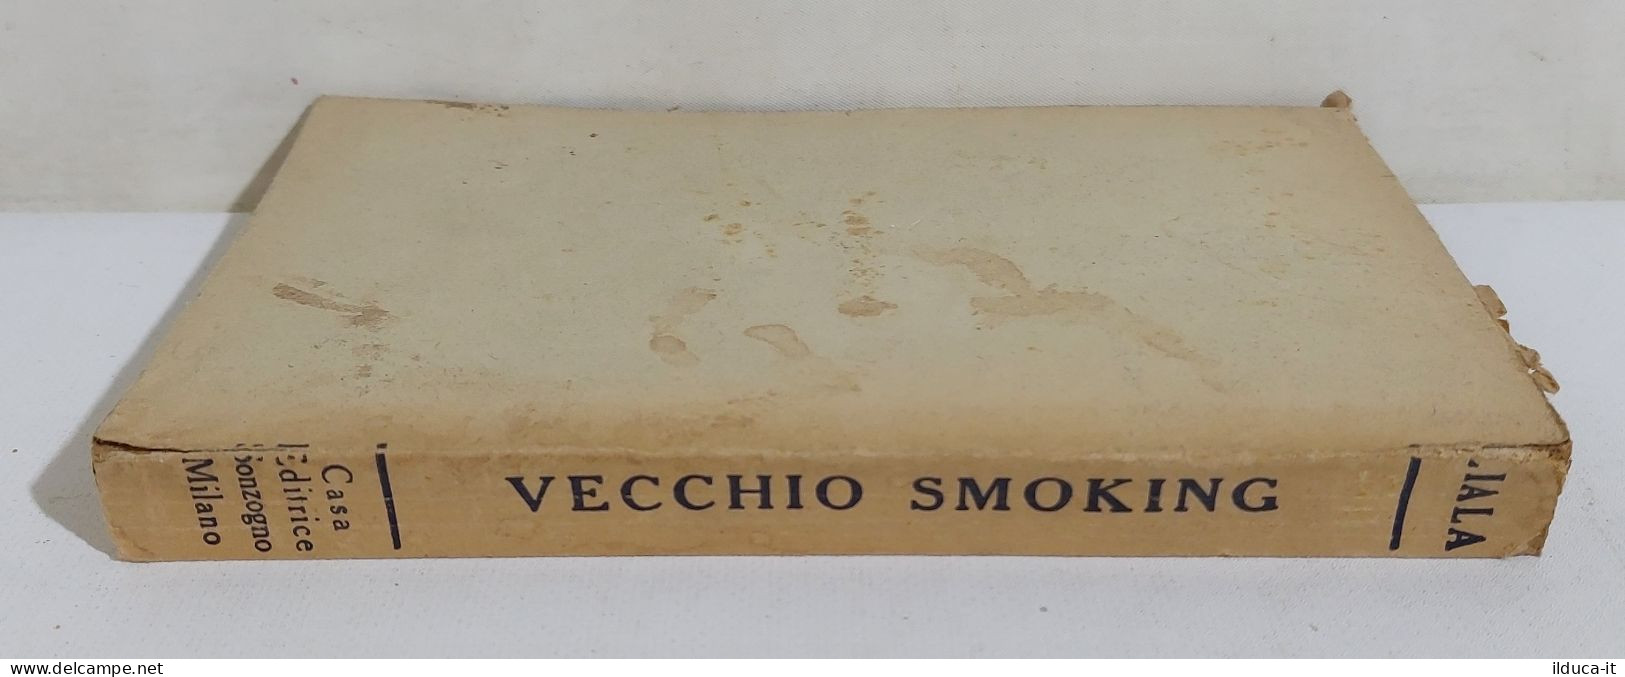 I115739 Liala - Vecchio Smoking - Sonzogno 1963 - Novelle, Racconti